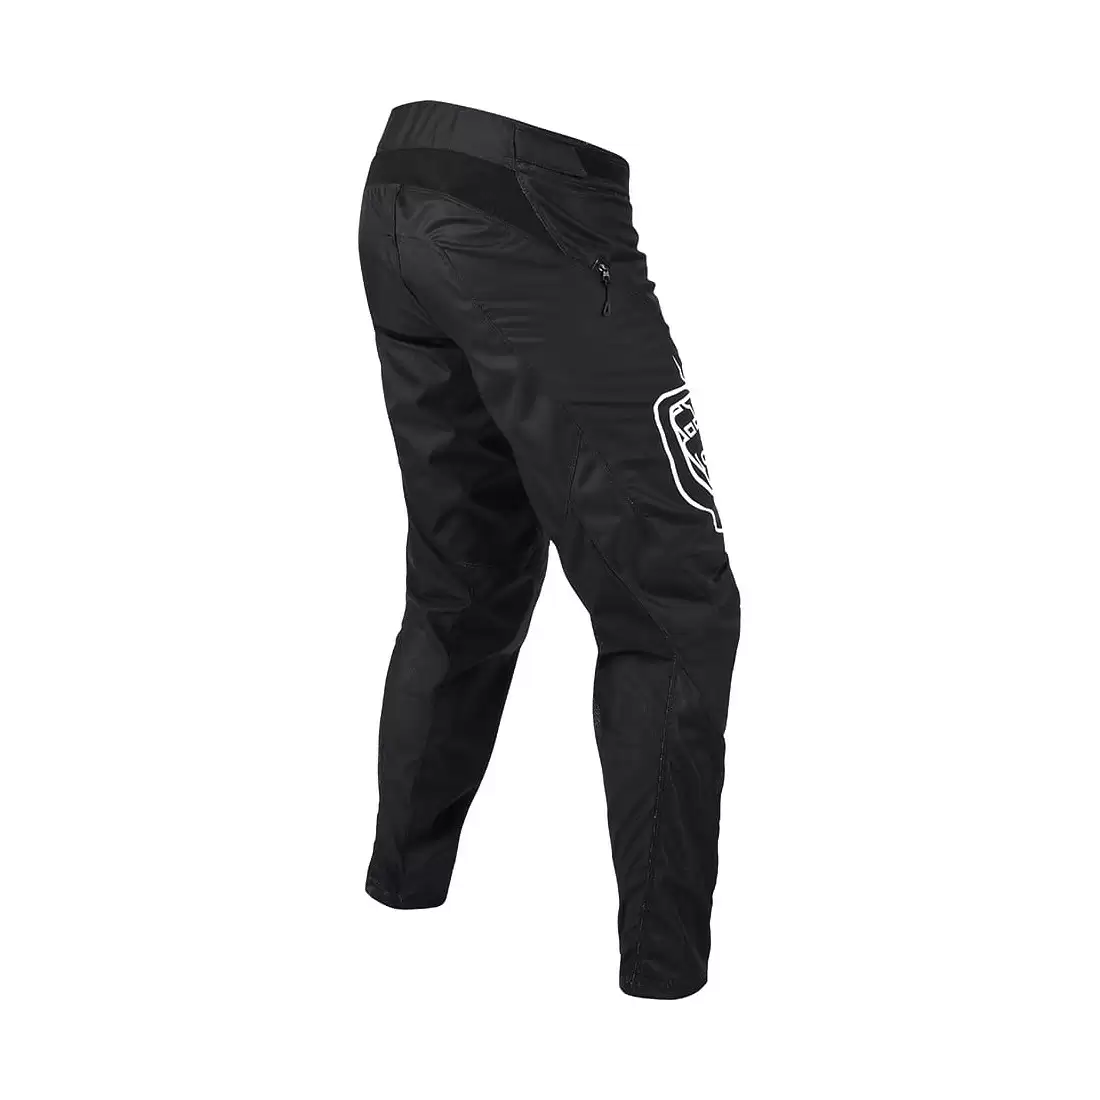 DH/Enduro Sprint MTB Long Pants Black Size L #1